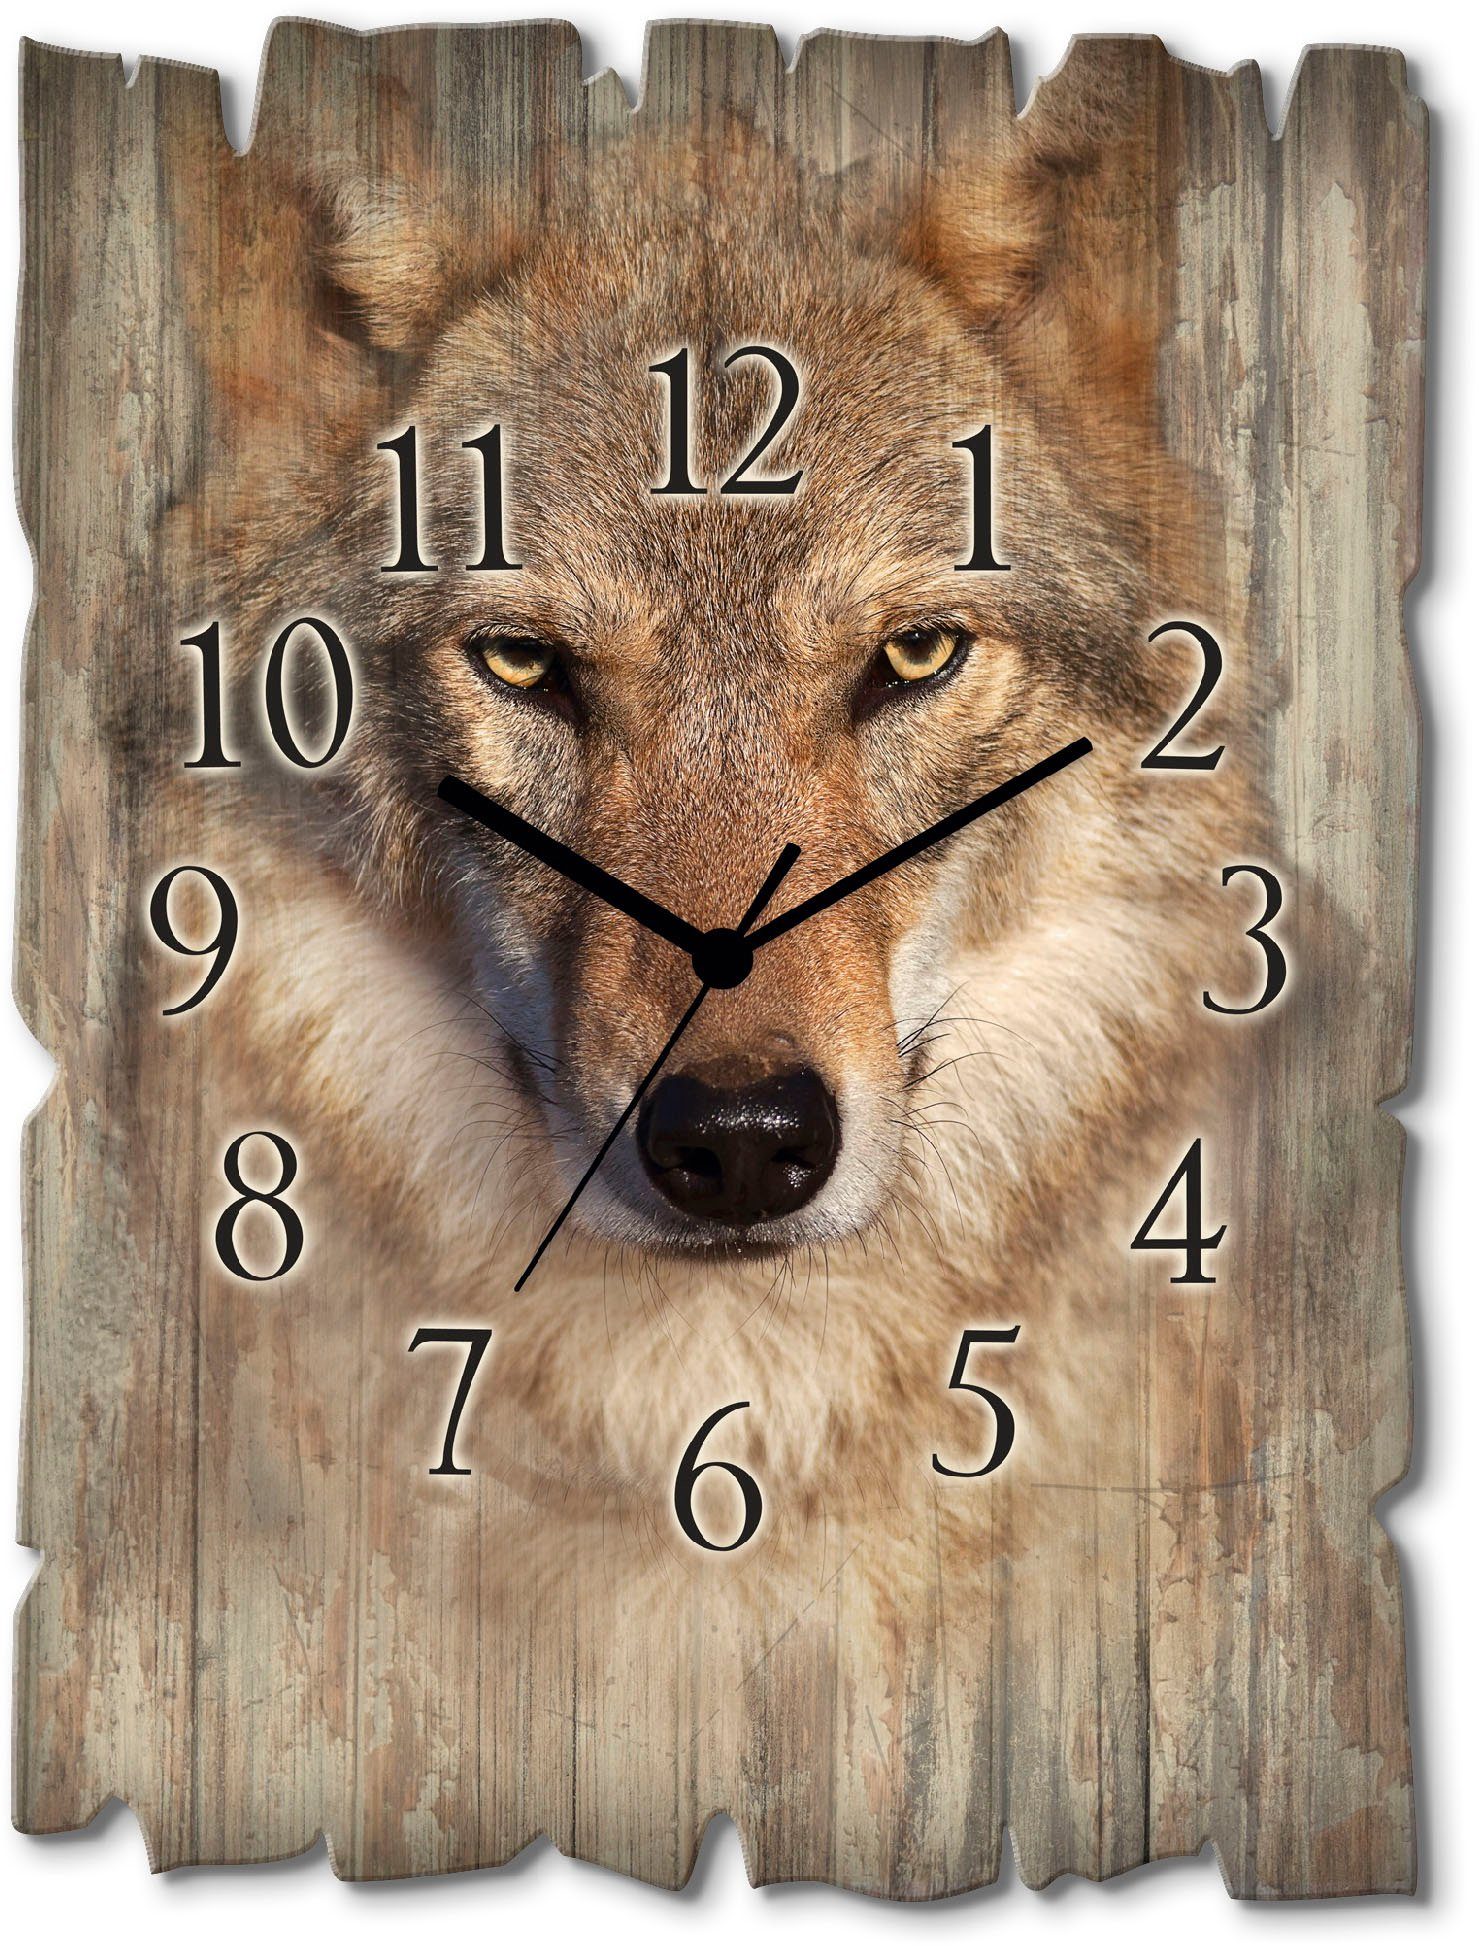 Artland Wanduhr Wolf (wahlweise mit Quarz- oder Funkuhrwerk, lautlos ohne Tickgeräusche) | Wanduhren